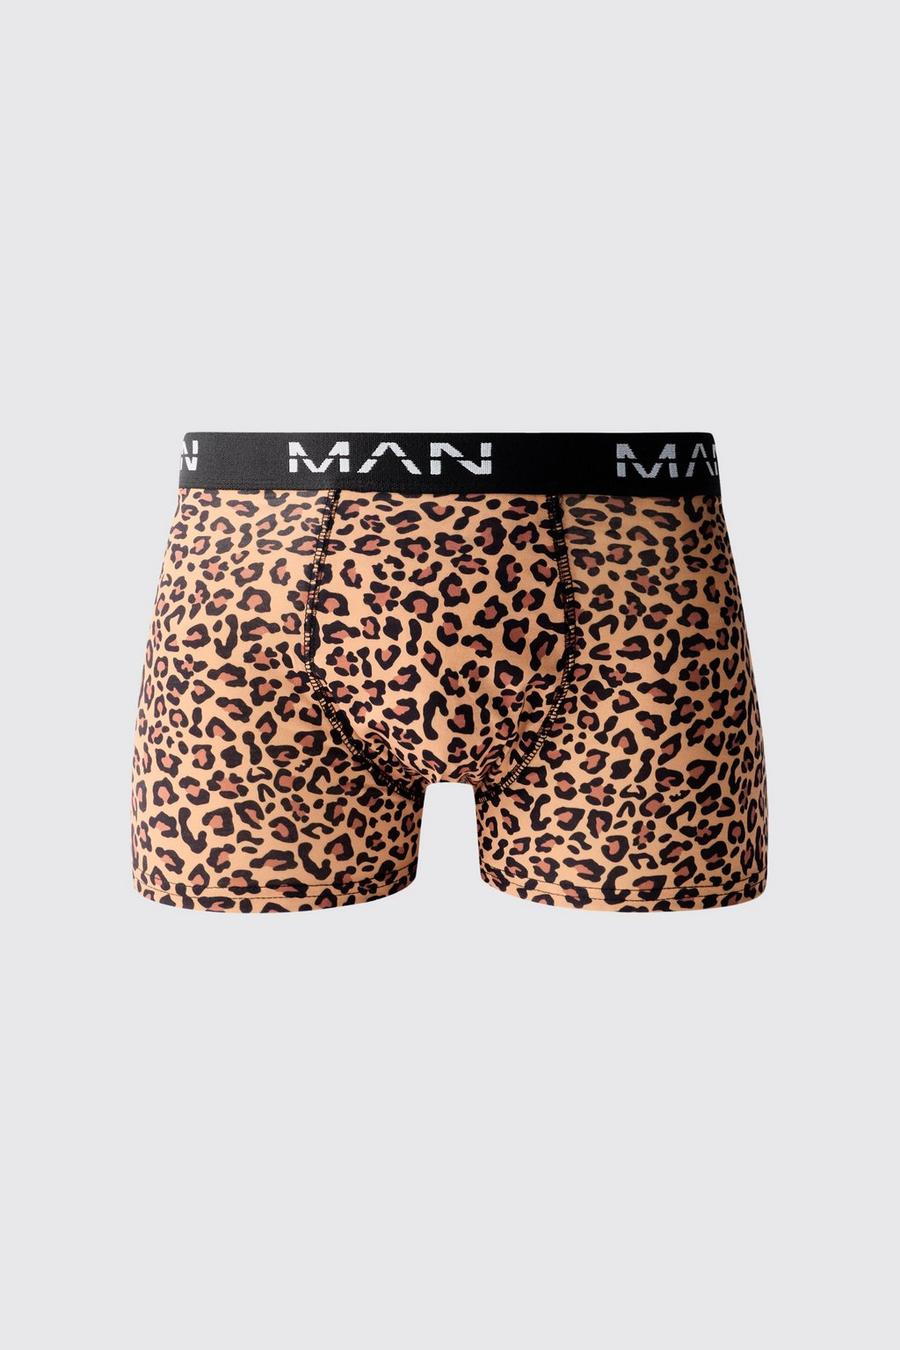 Man Leopard Printed Boxers